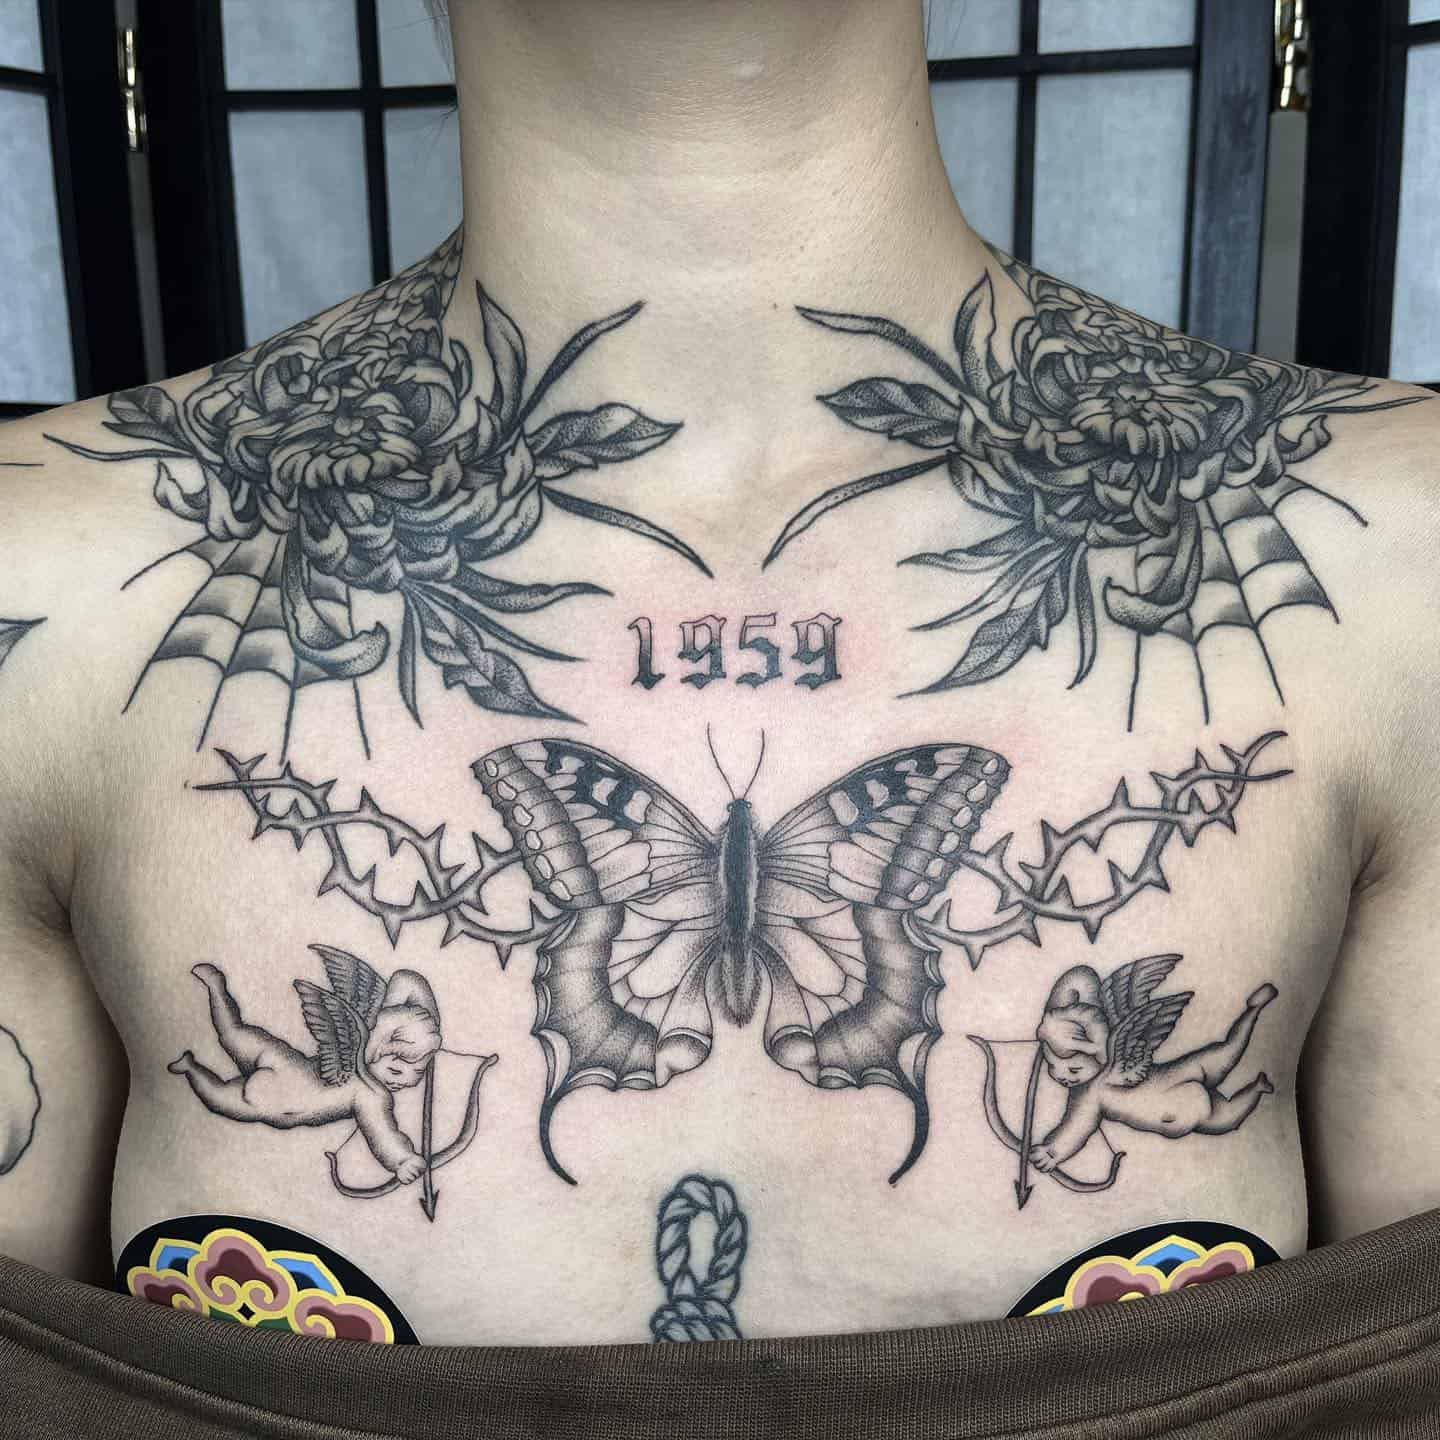 tattoo on chest by trashlee.tattoos